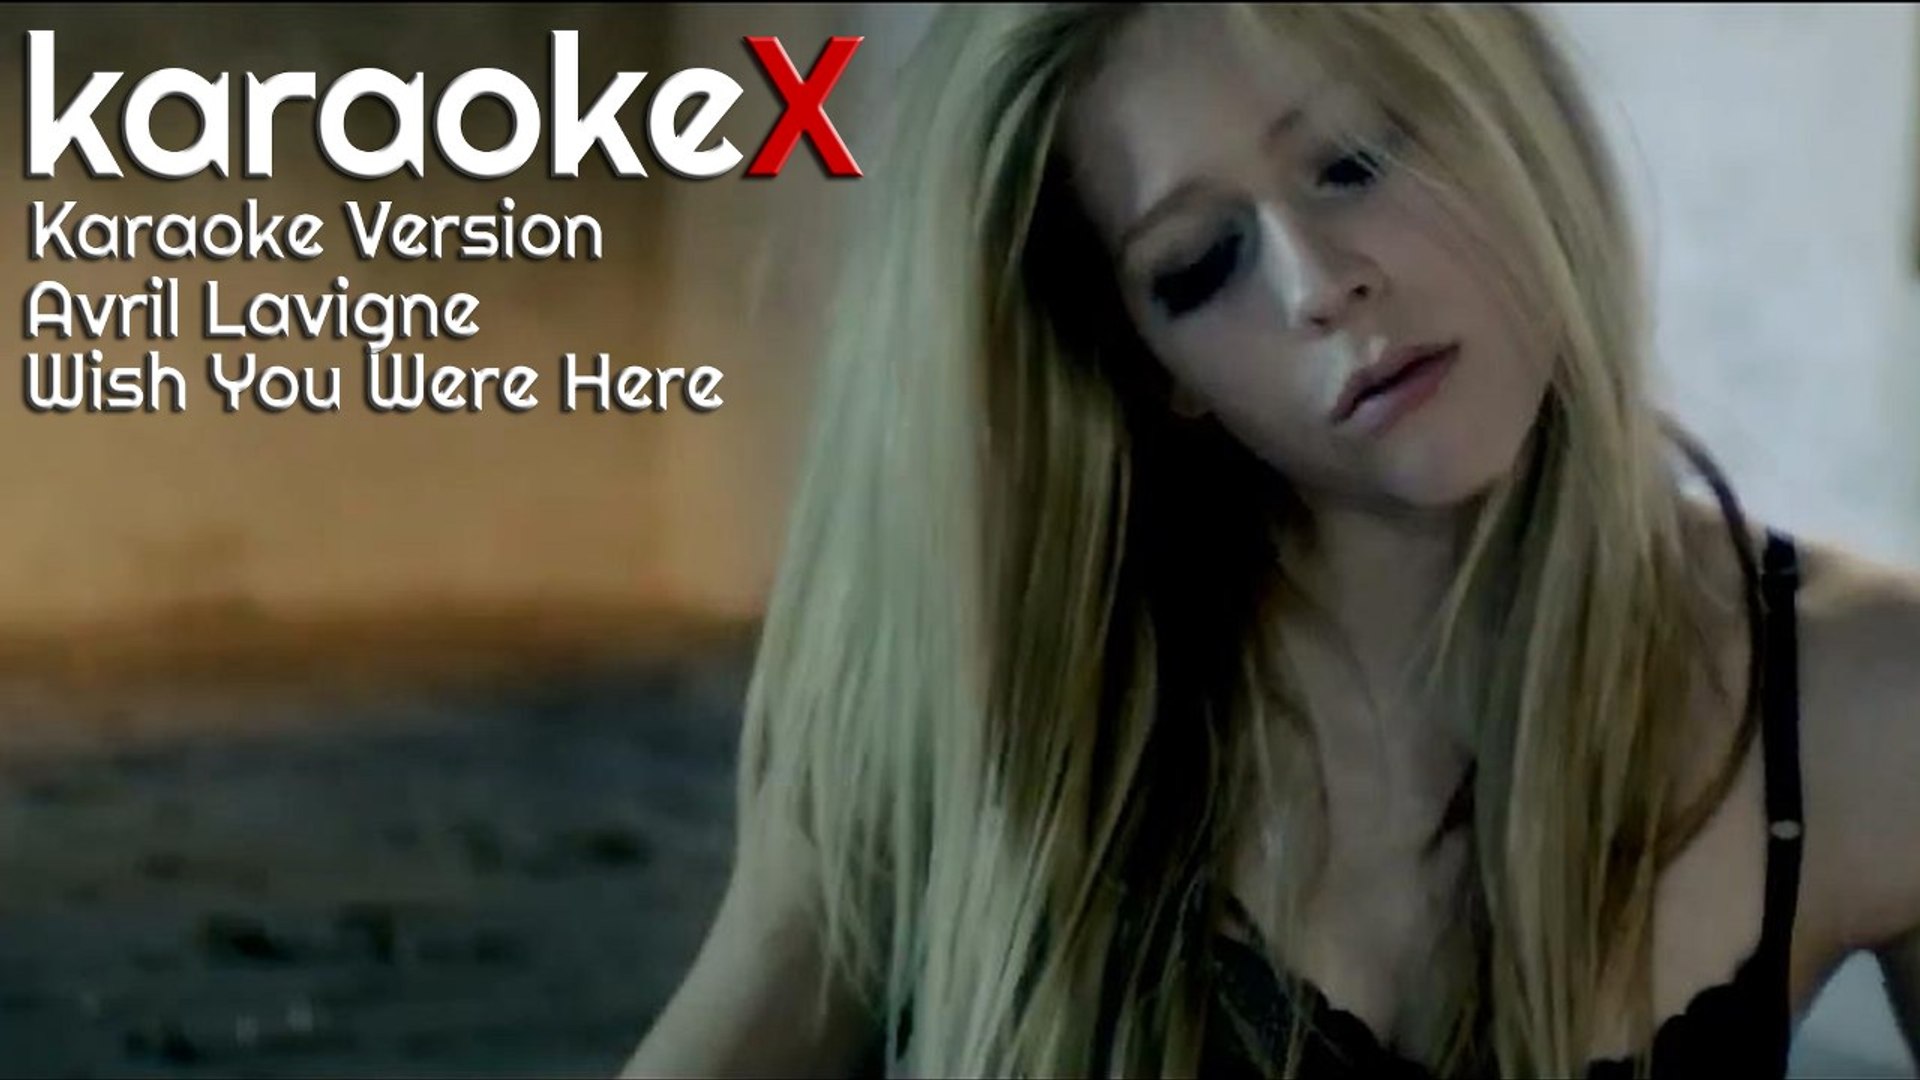 Avril Lavigne Wish You Were Here Karaoke Version Karaokex Video Dailymotion